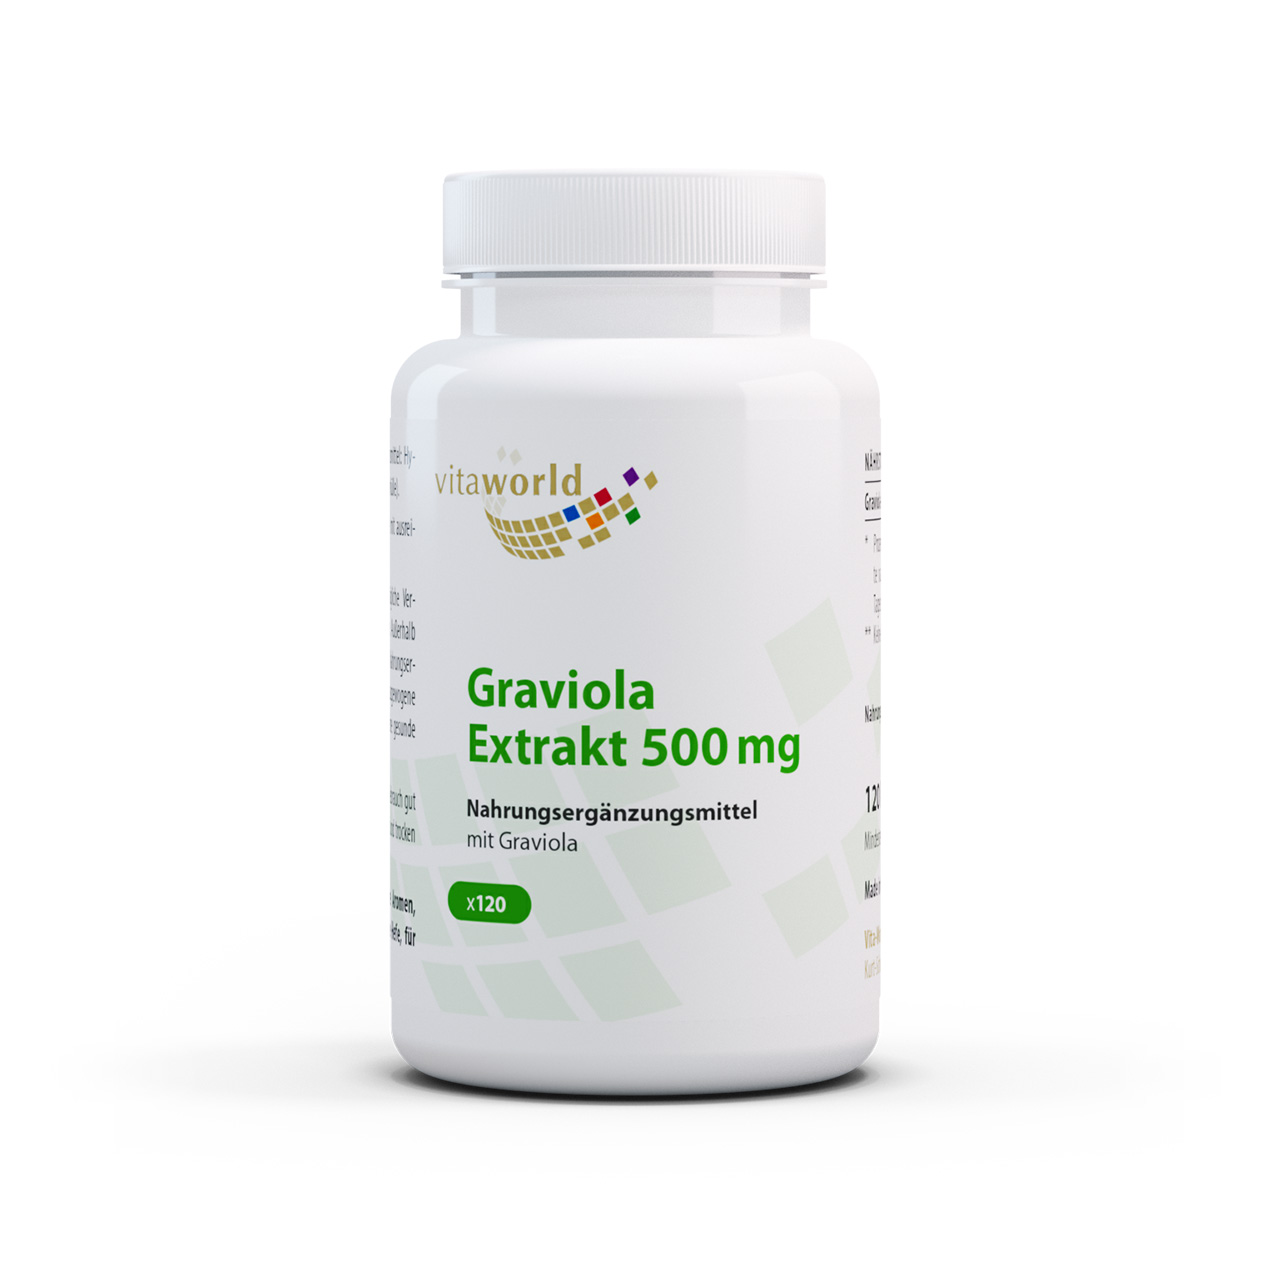 Vitaworld Graviola Extrakt 500 mg | 120 Kapseln | hochdosiert | vegan